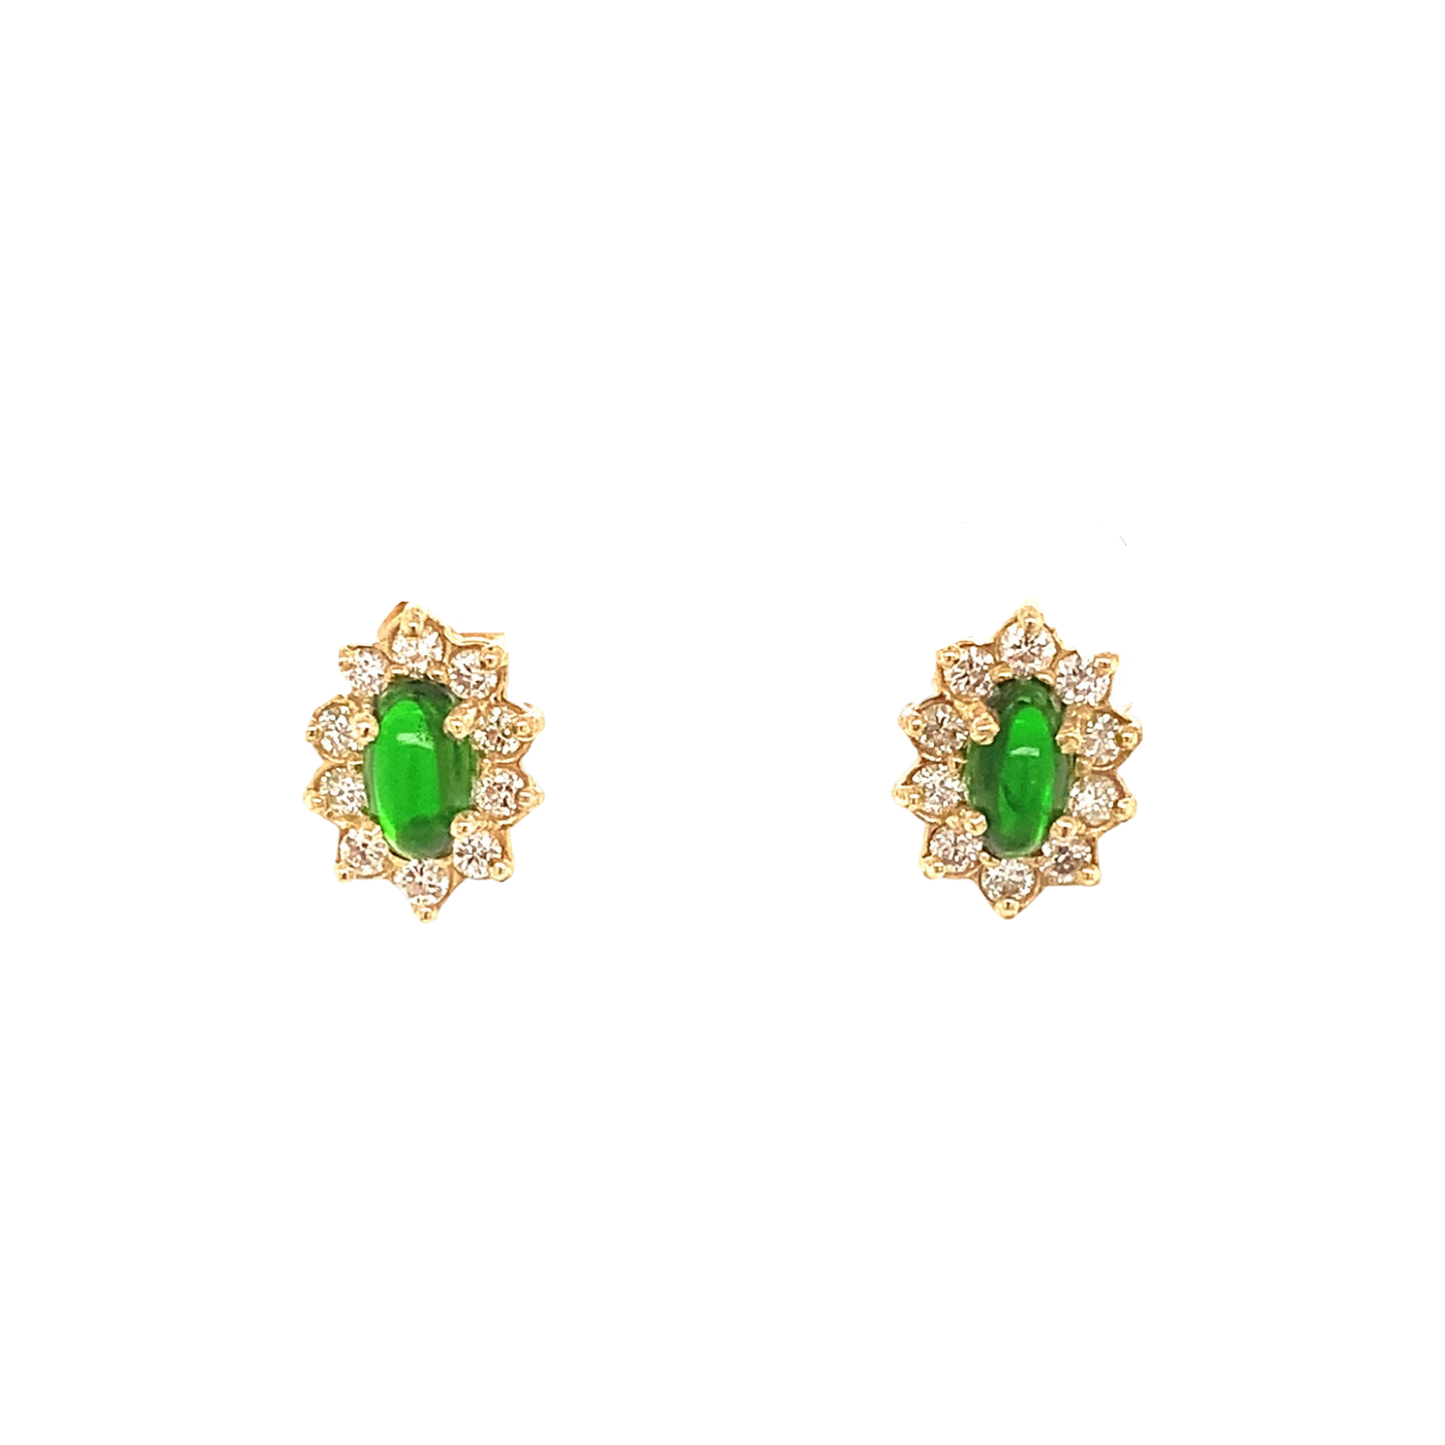 Natural Tourmaline Diamond Earrings 14k Gold 0.85 TCW Certified $1,250 113472 - Certified Fine Jewelry